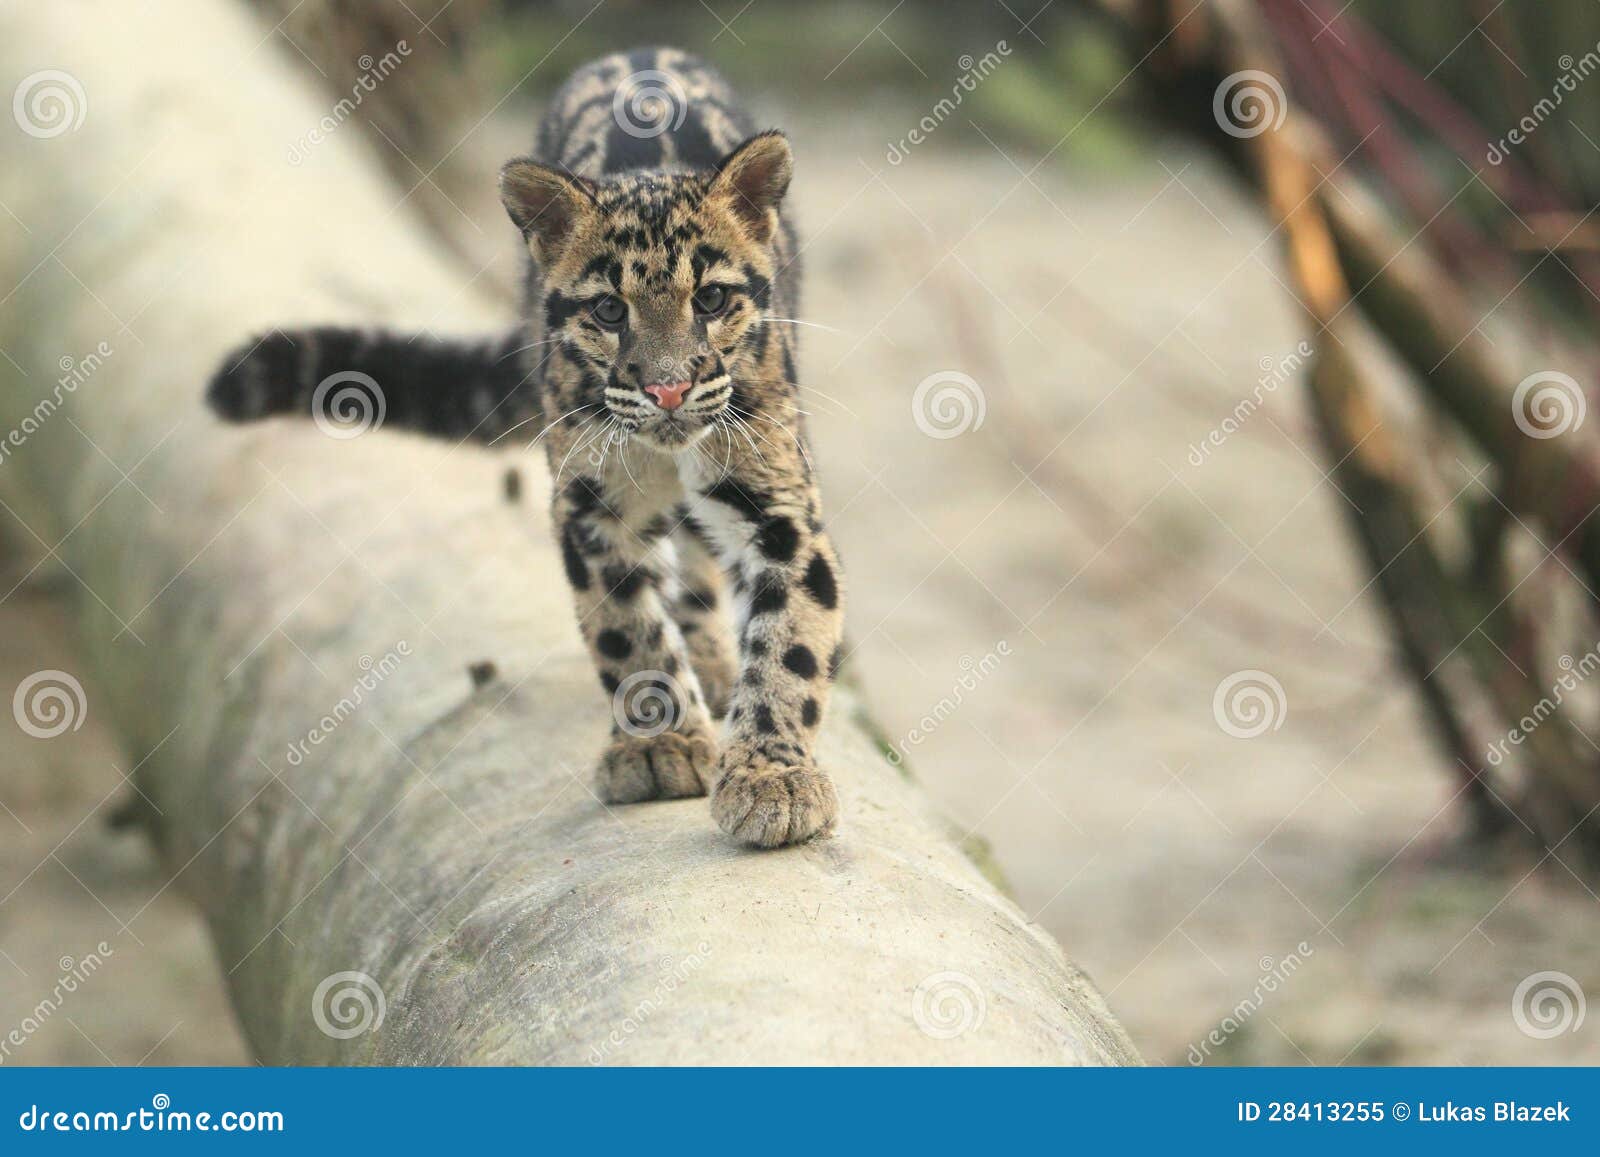 clouded leopard juvenile